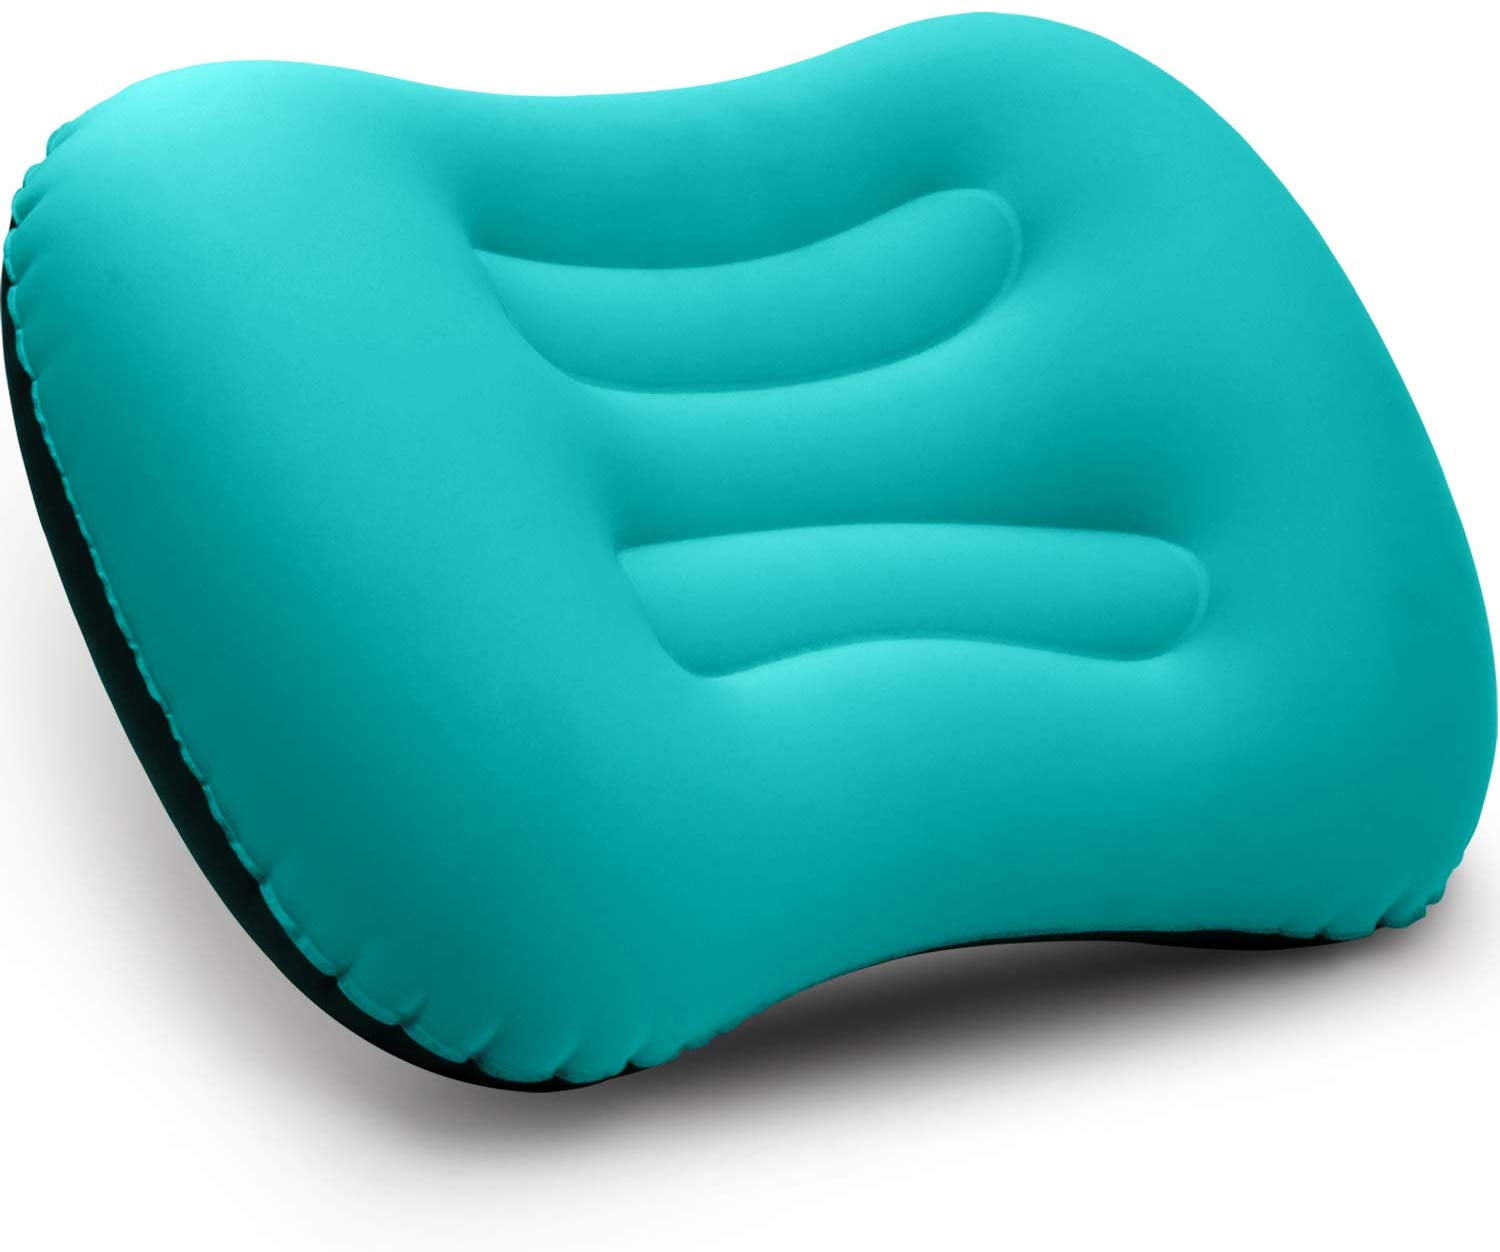 Betus DREAMER COMFORT Inflatable Foot Rest Travel Pillow  B.Inflat.FootPillow.Gray - The Home Depot